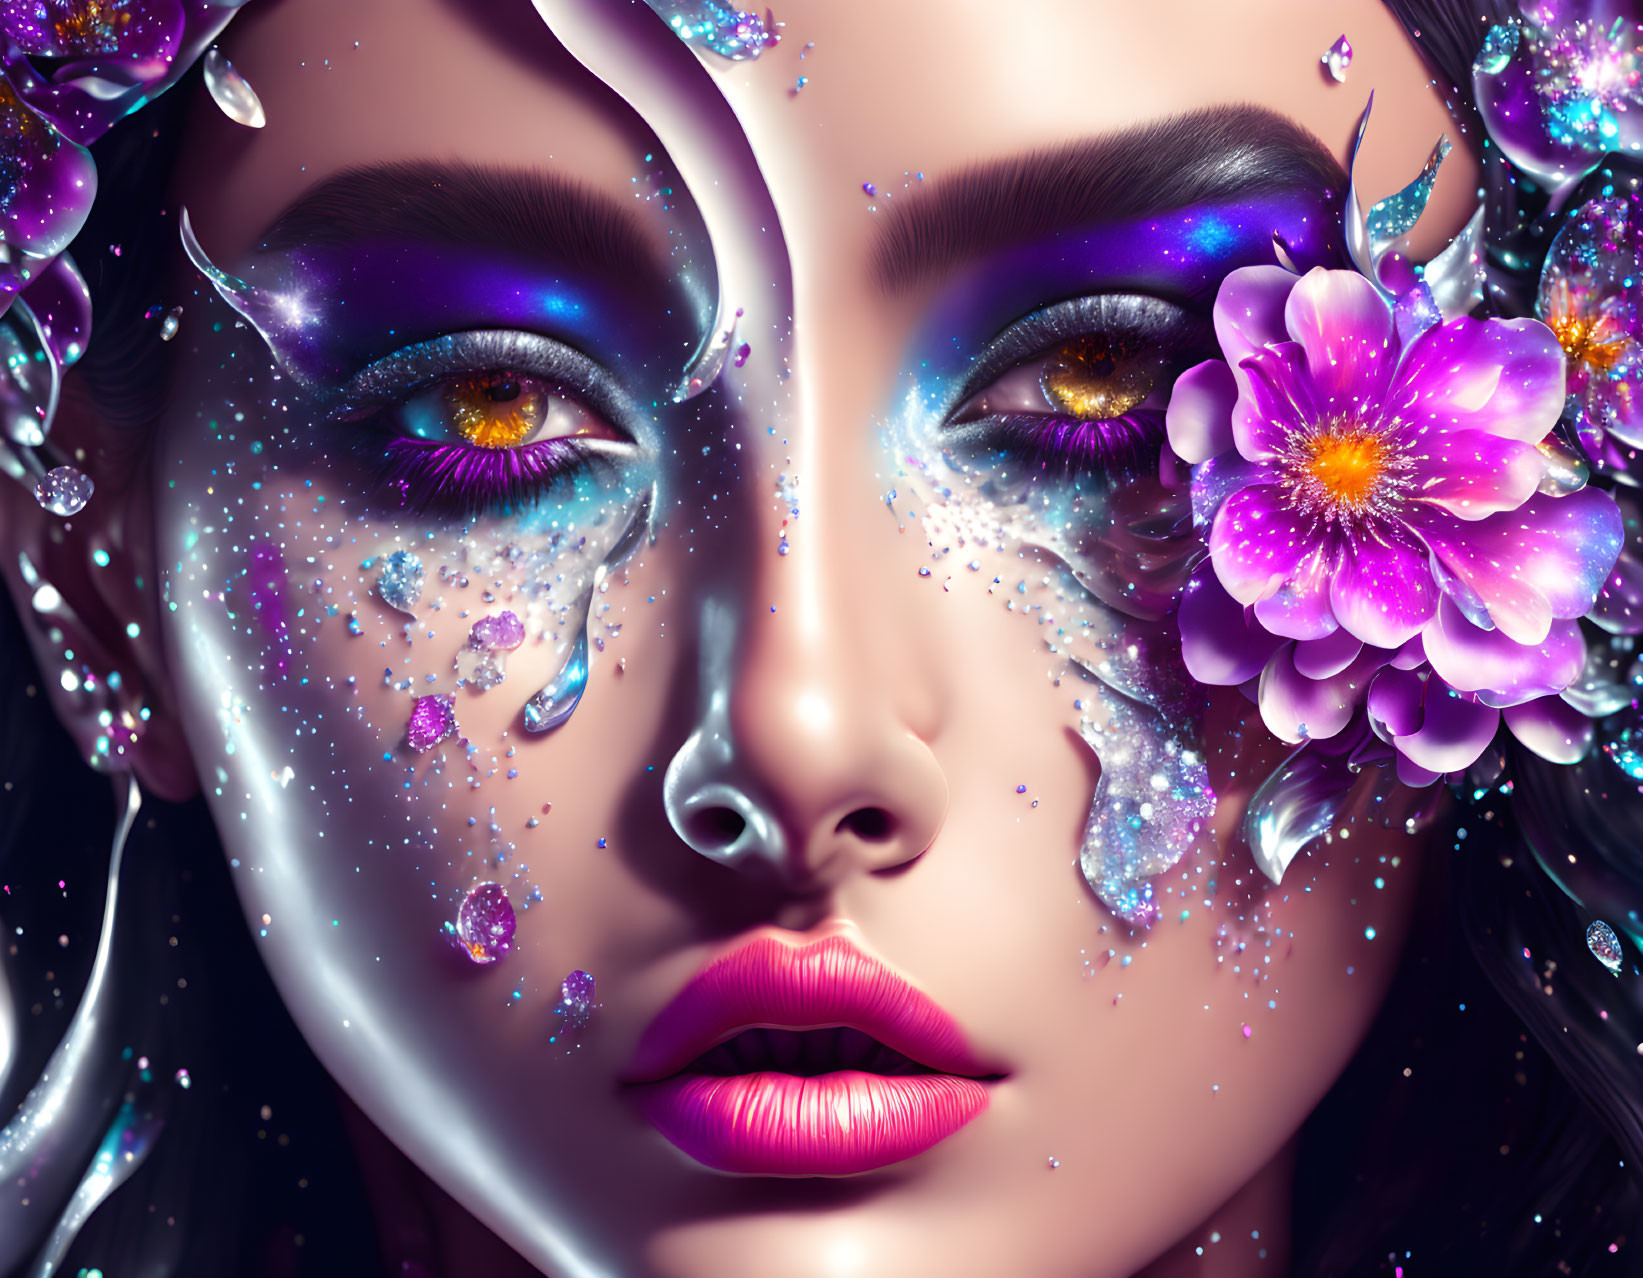 Detailed digital artwork: Woman's face with vibrant purple flowers, sparkling makeup, tear.